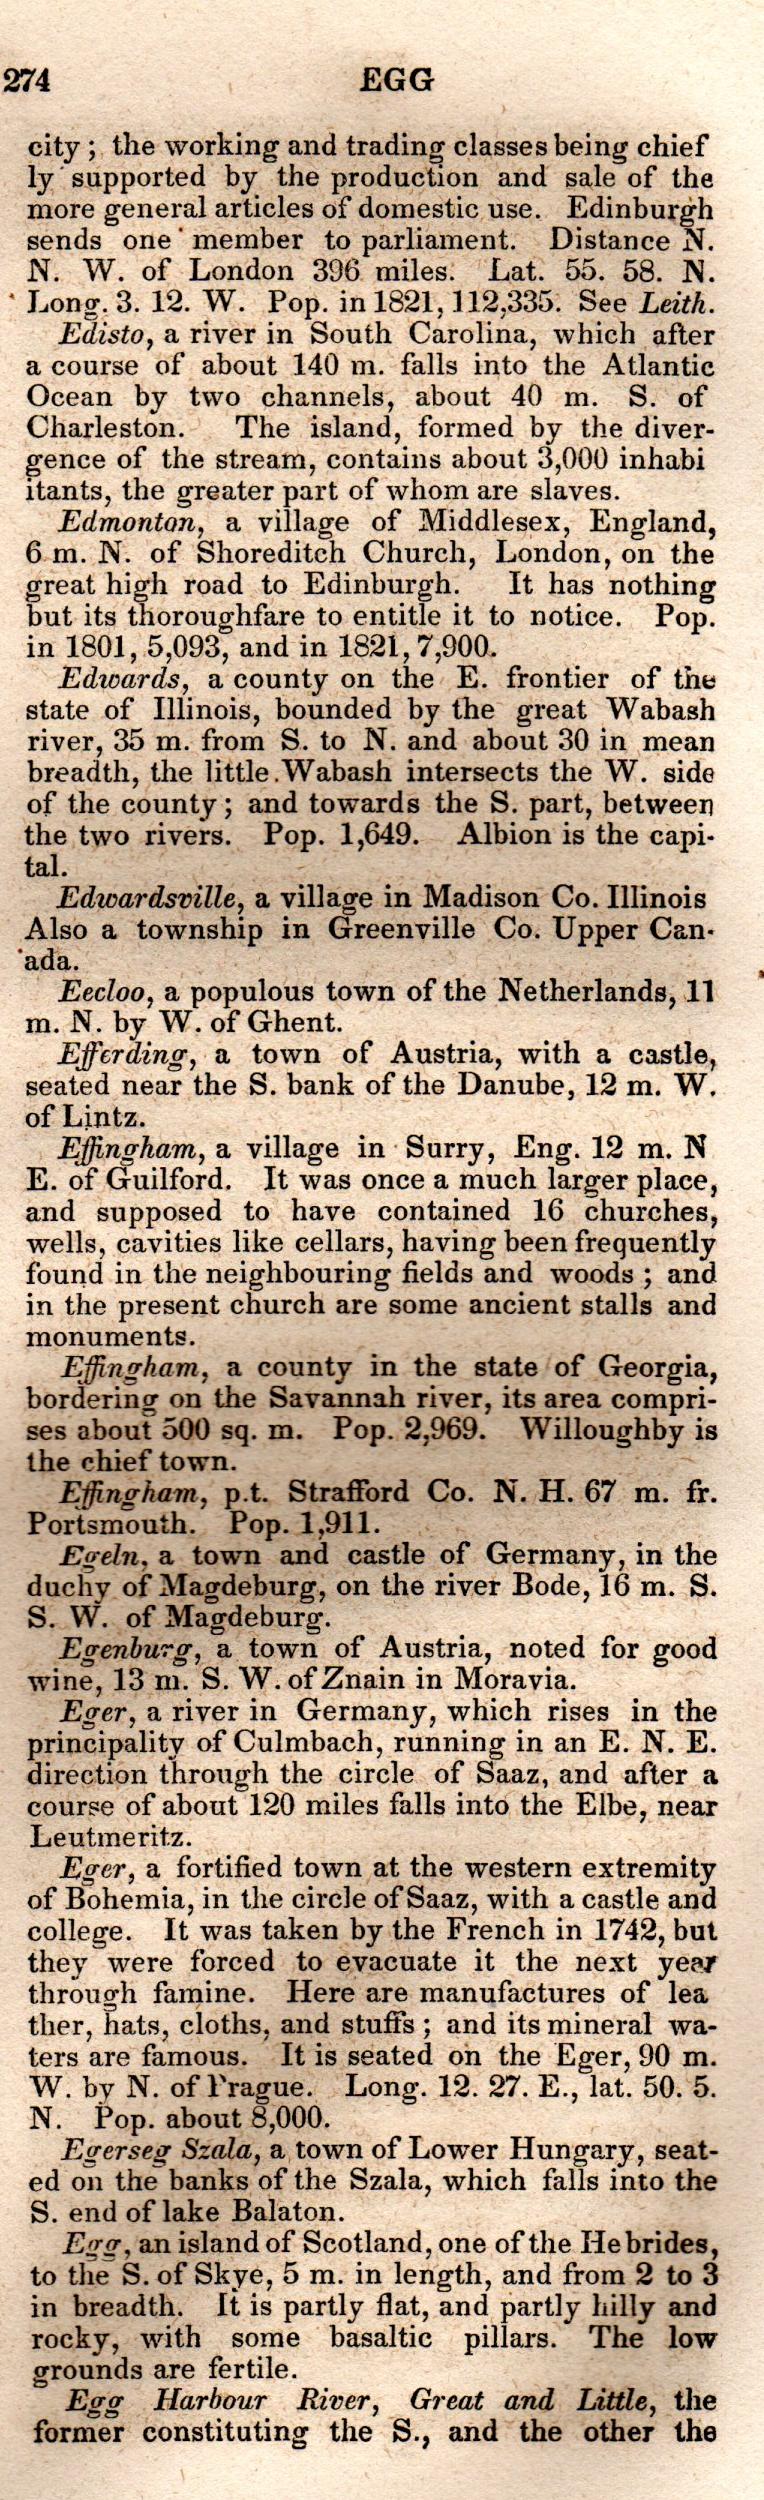 Brookes’ Universal Gazetteer (1850), Page 274 Right Column